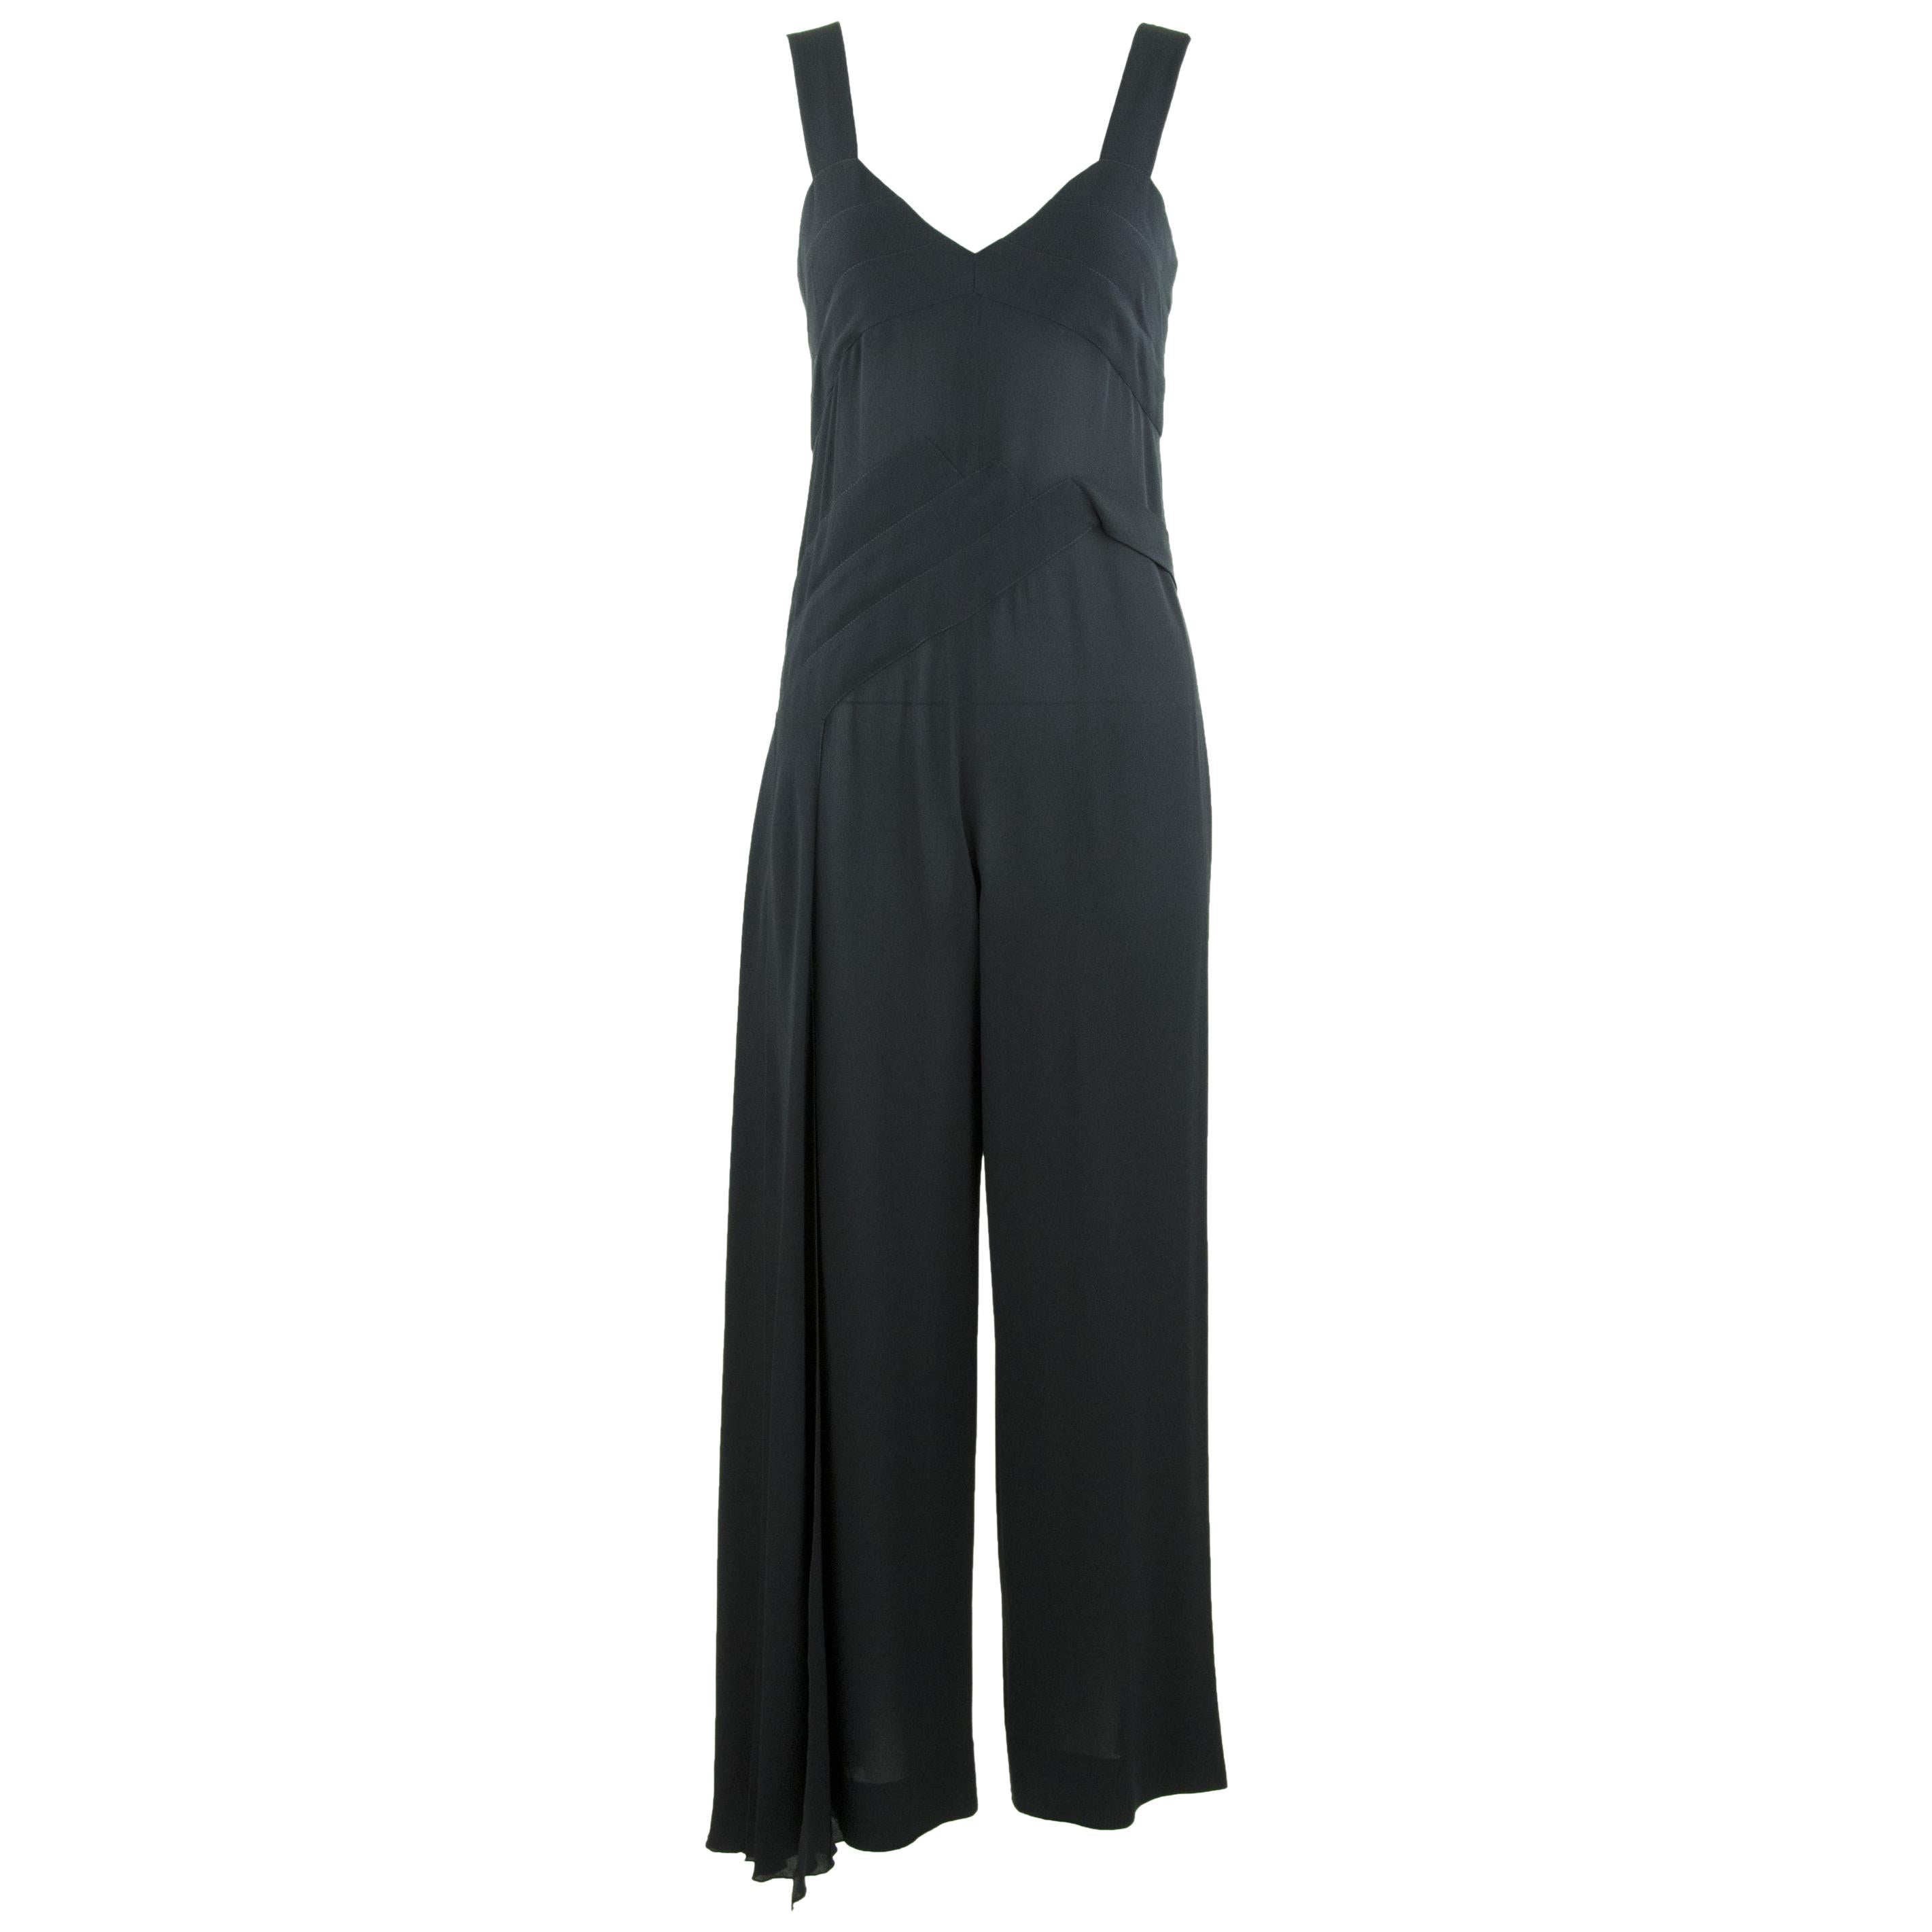 Chanel Black Sleeveless Silk Jumpsuit - Size FR 36/38 For Sale